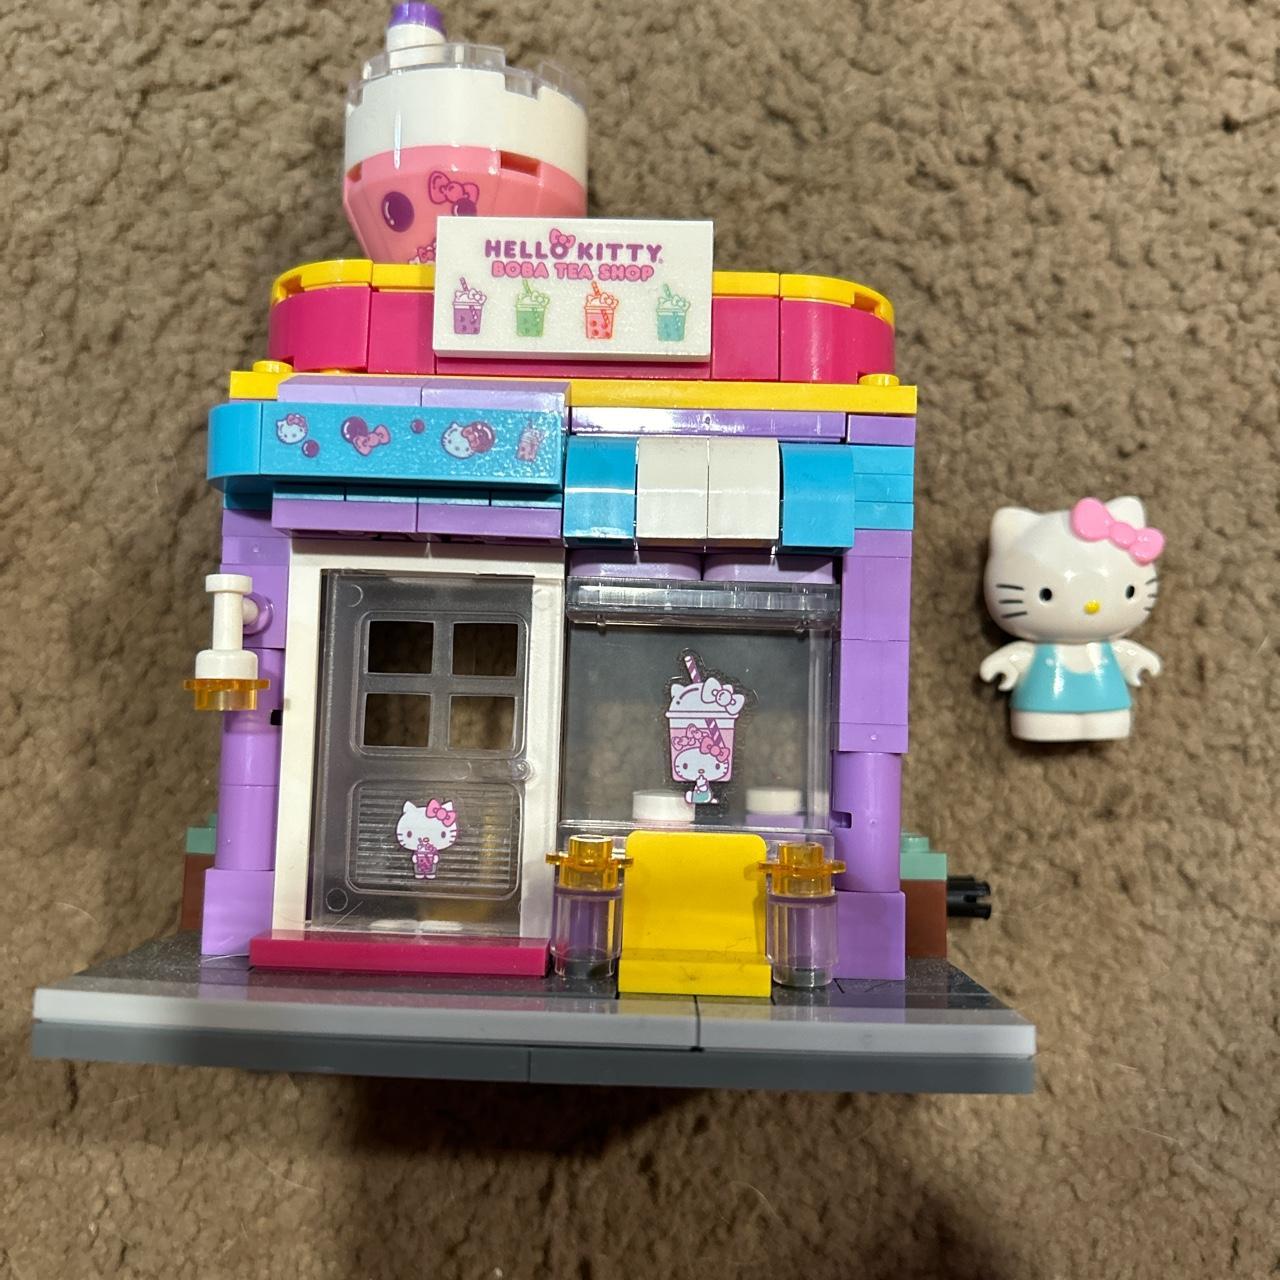 Boba shop hello Kitty Lego set - Depop